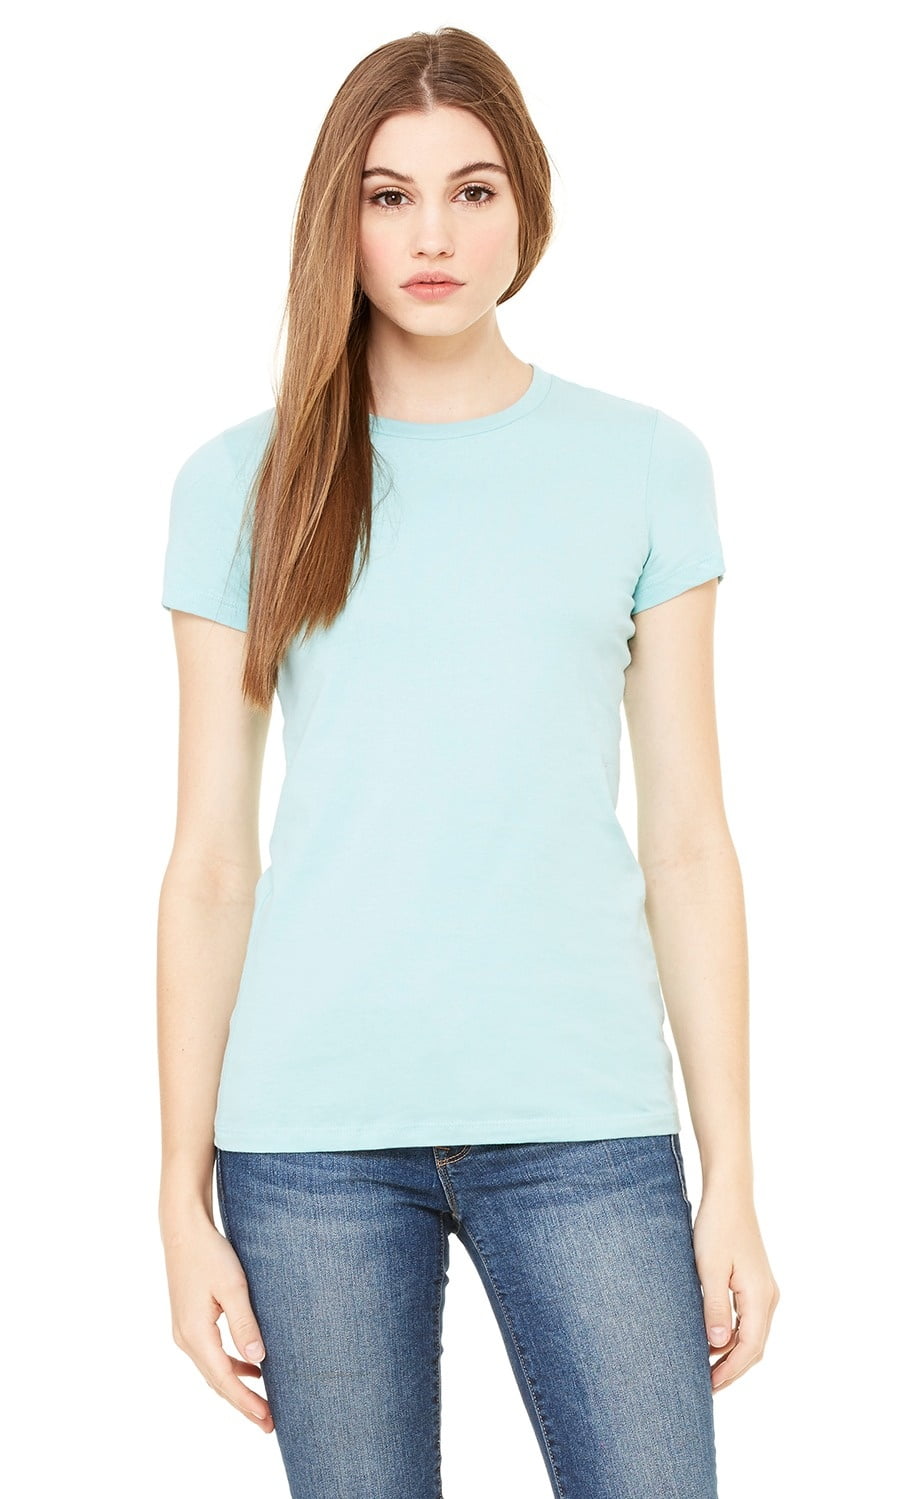 The Bella + Canvas Ladies The Favorite T-Shirt - SEAFOAM BLUE - XL ...